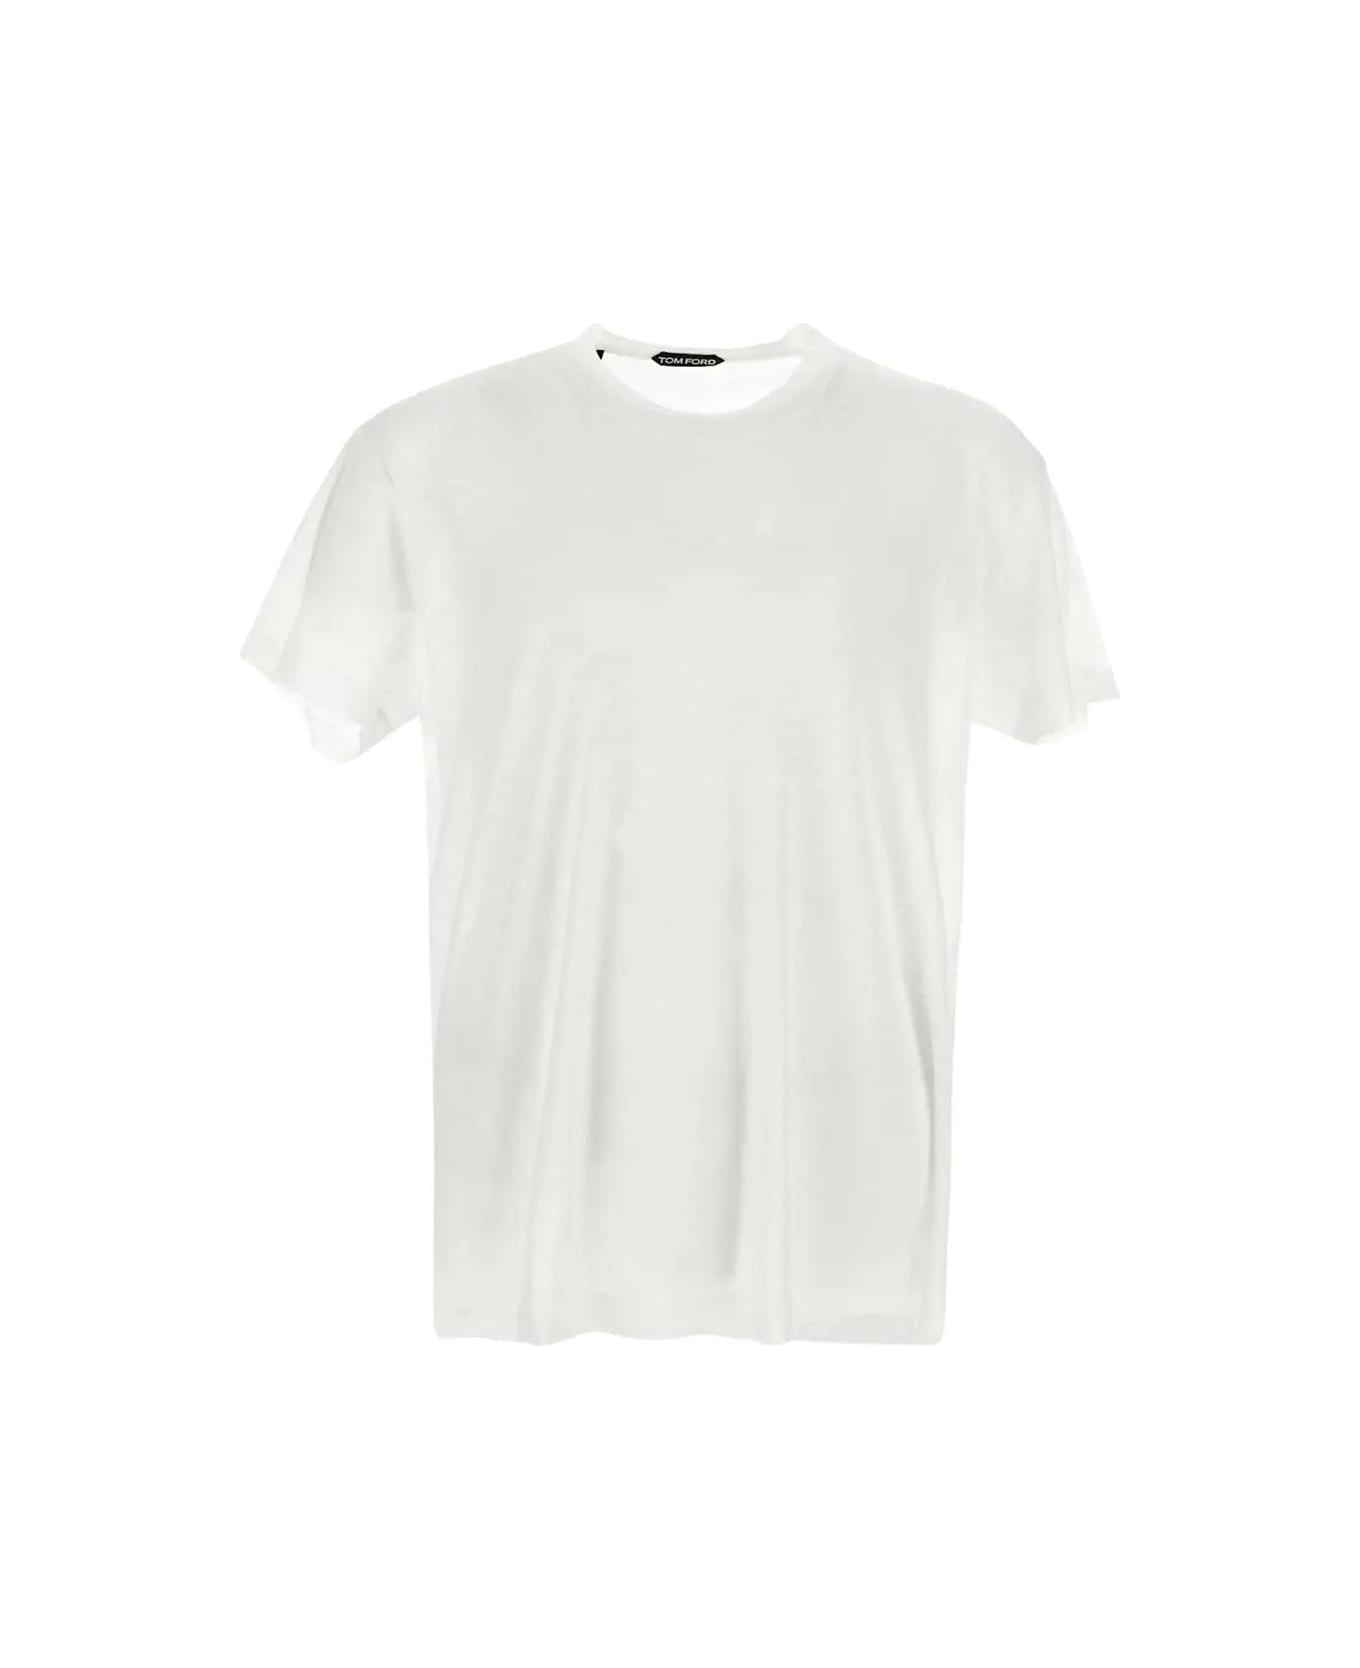 Tom Ford Classic T-shirt - White